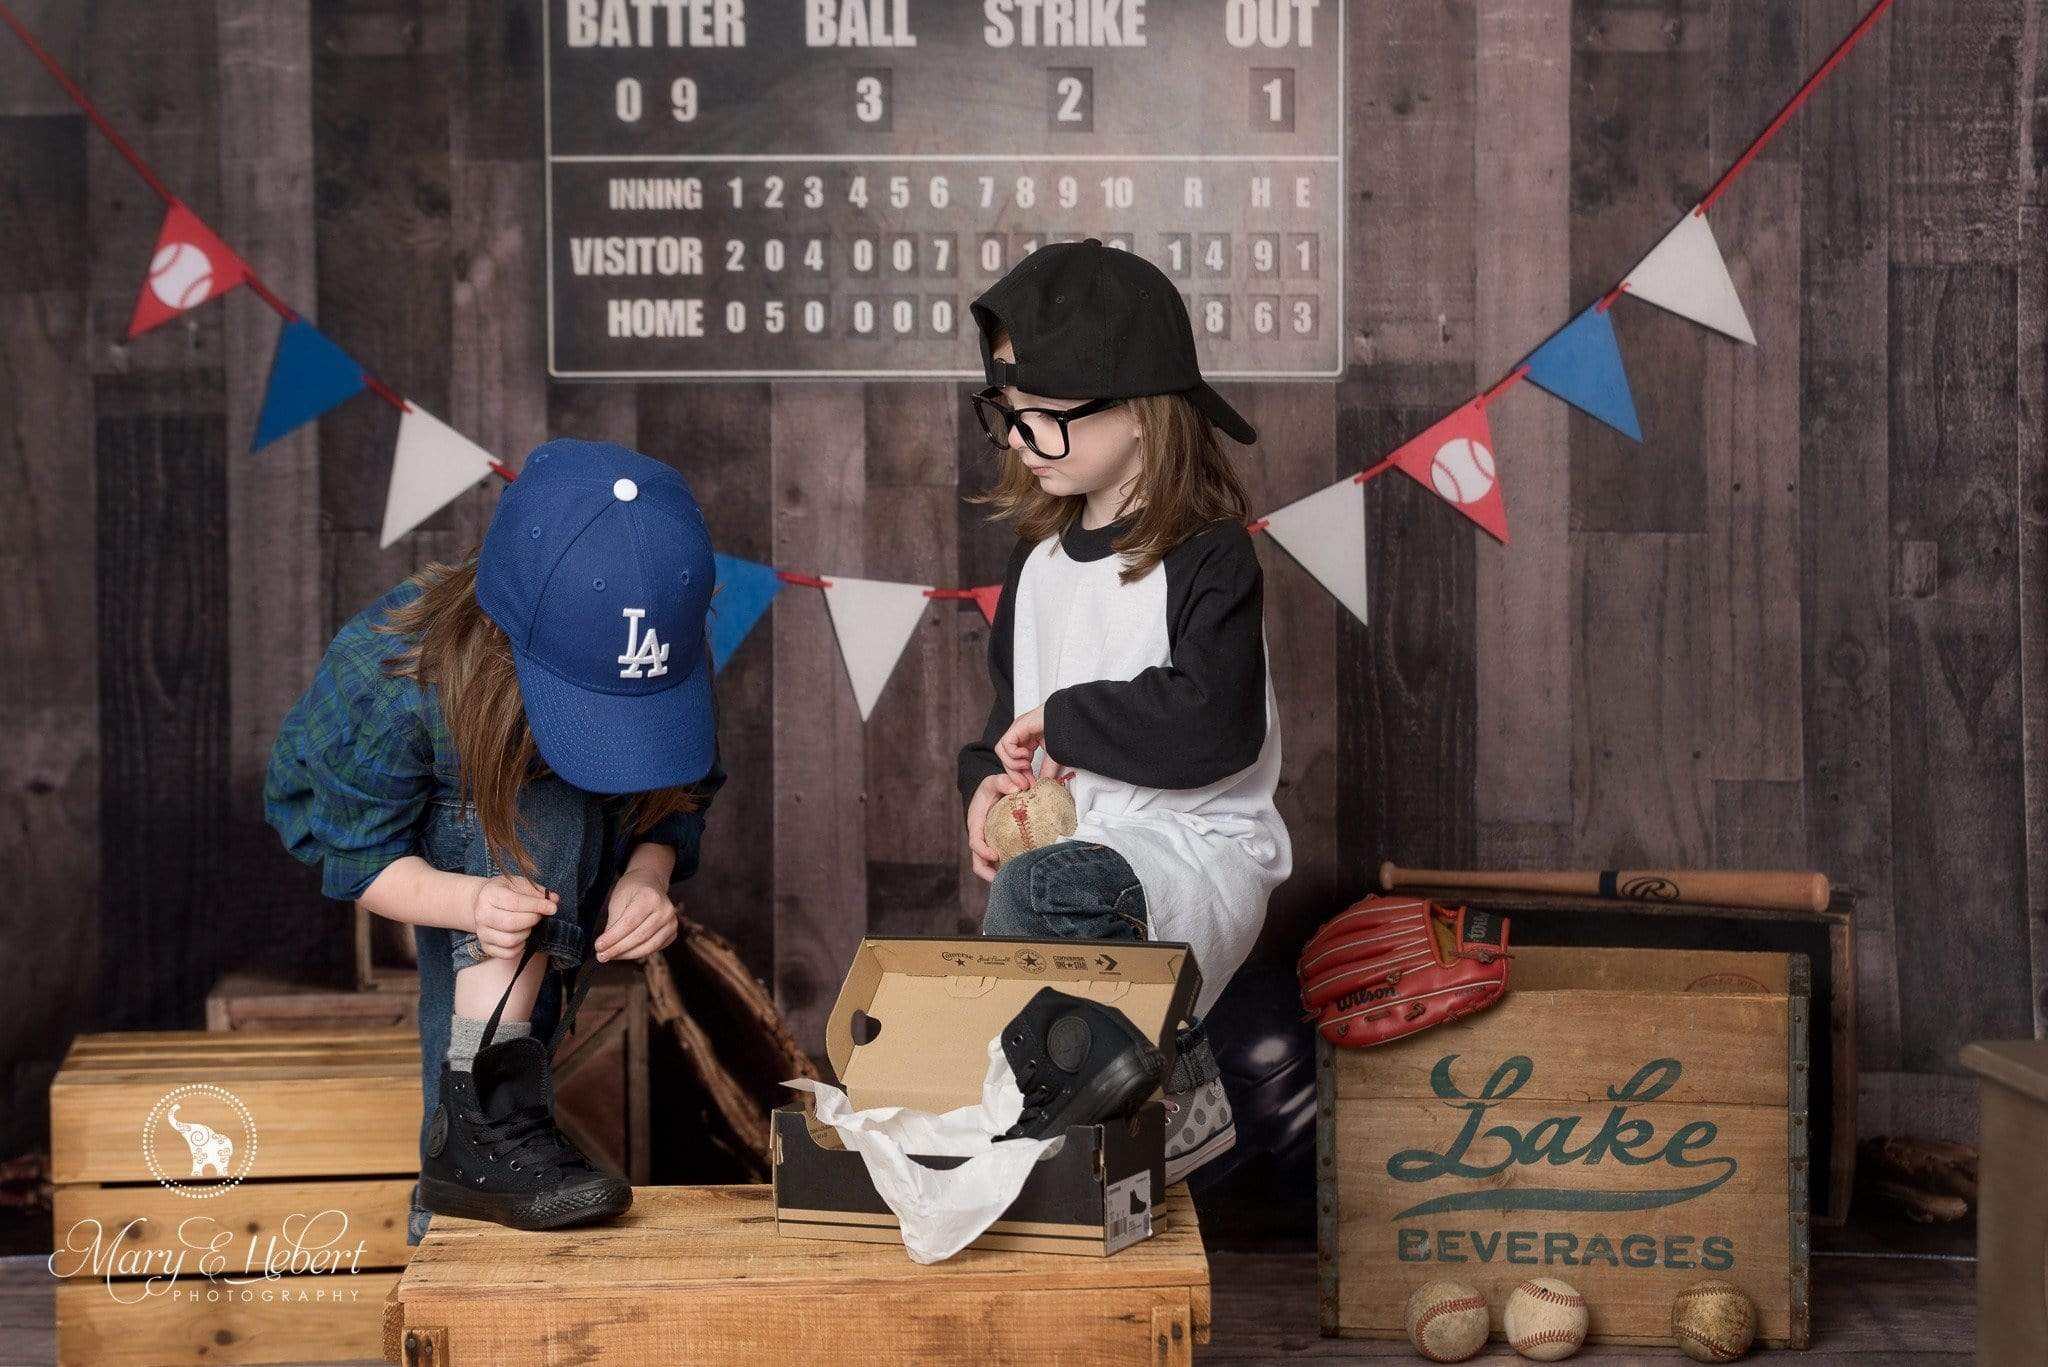 Katebackdrop£ºKate Vintage Baseball with Scoreboard Sport Backdrop for Photography Designed By Mandy Ringe Photography